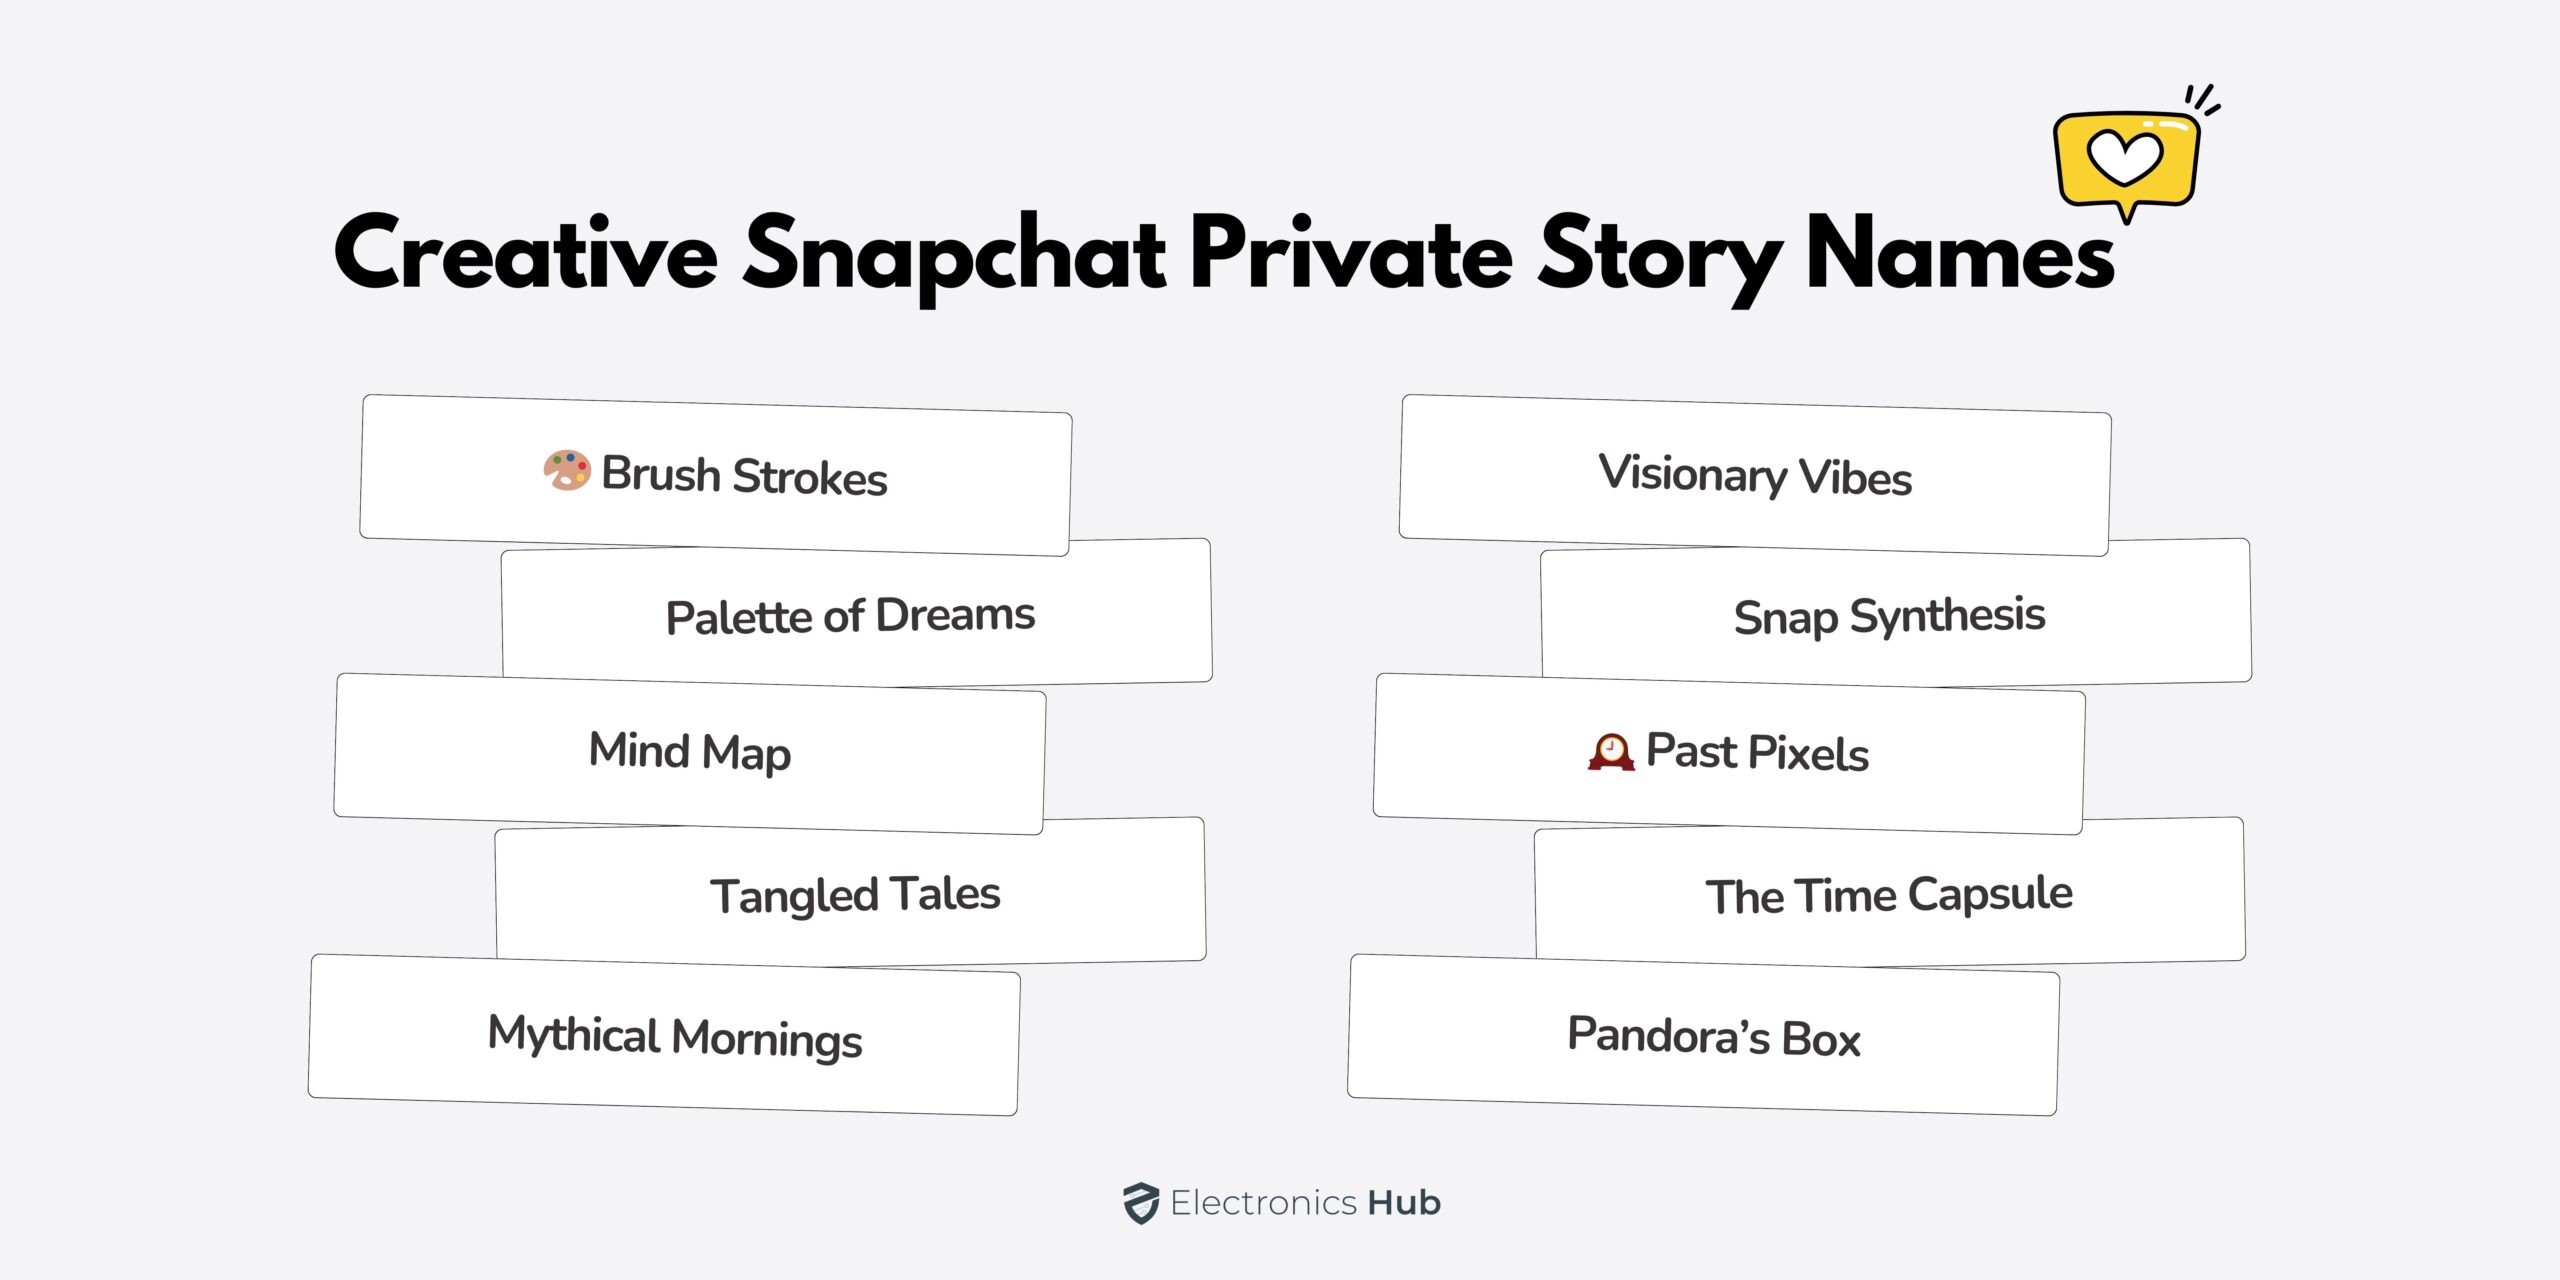 Creative Snapchat Private Story Names